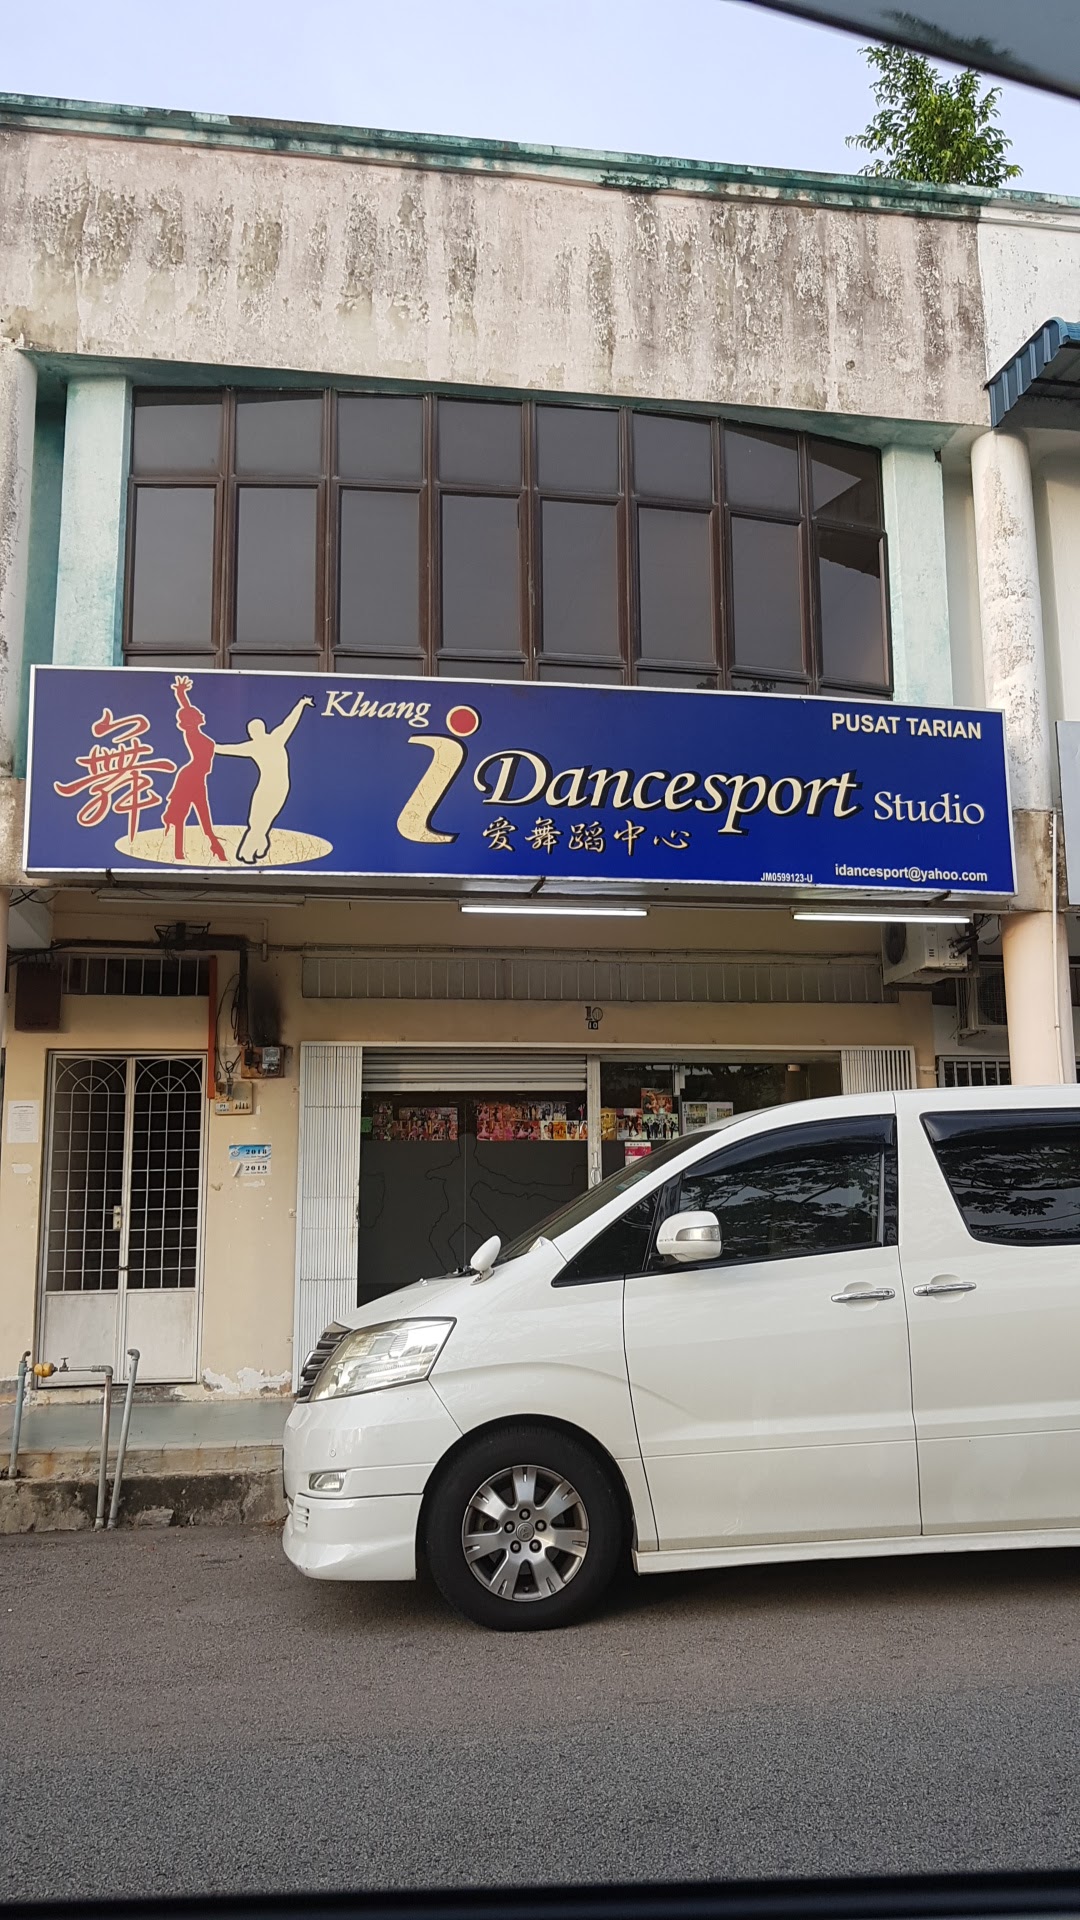 Kluang i Dance Sport Studio